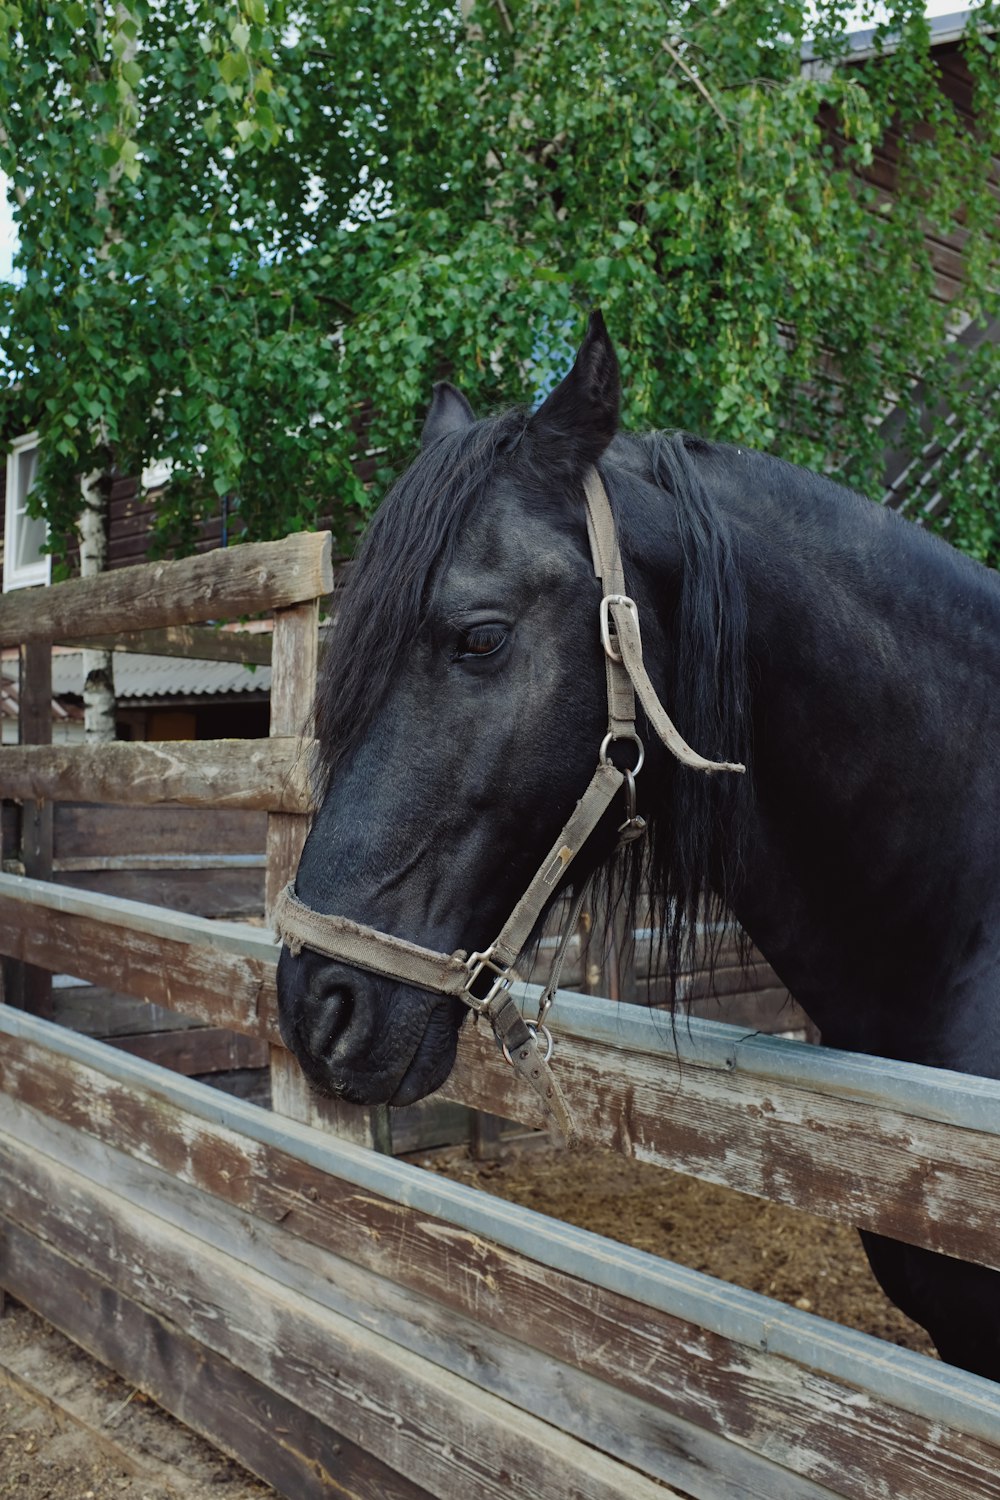 Black Horses Pictures  Download Free Images on Unsplash